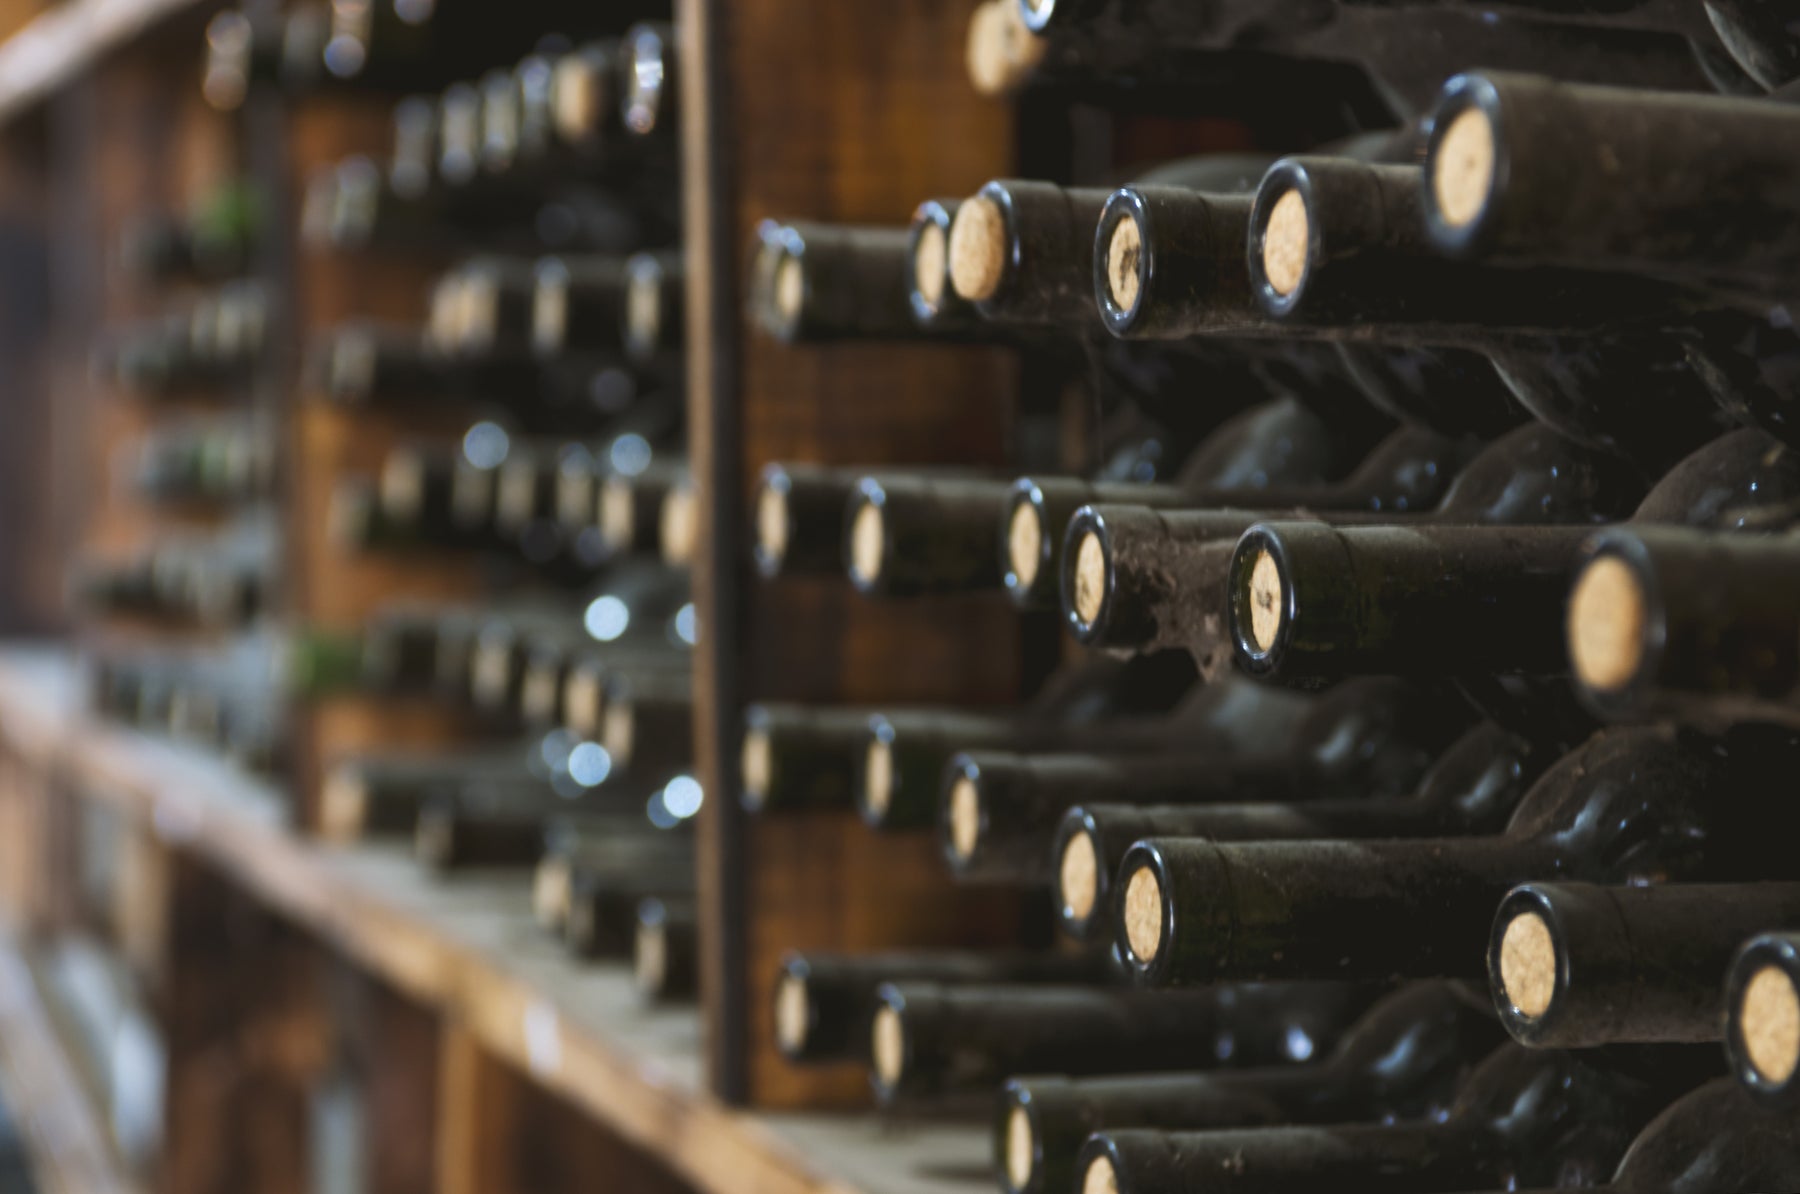 Wine bottles stored on its side in a wine rack